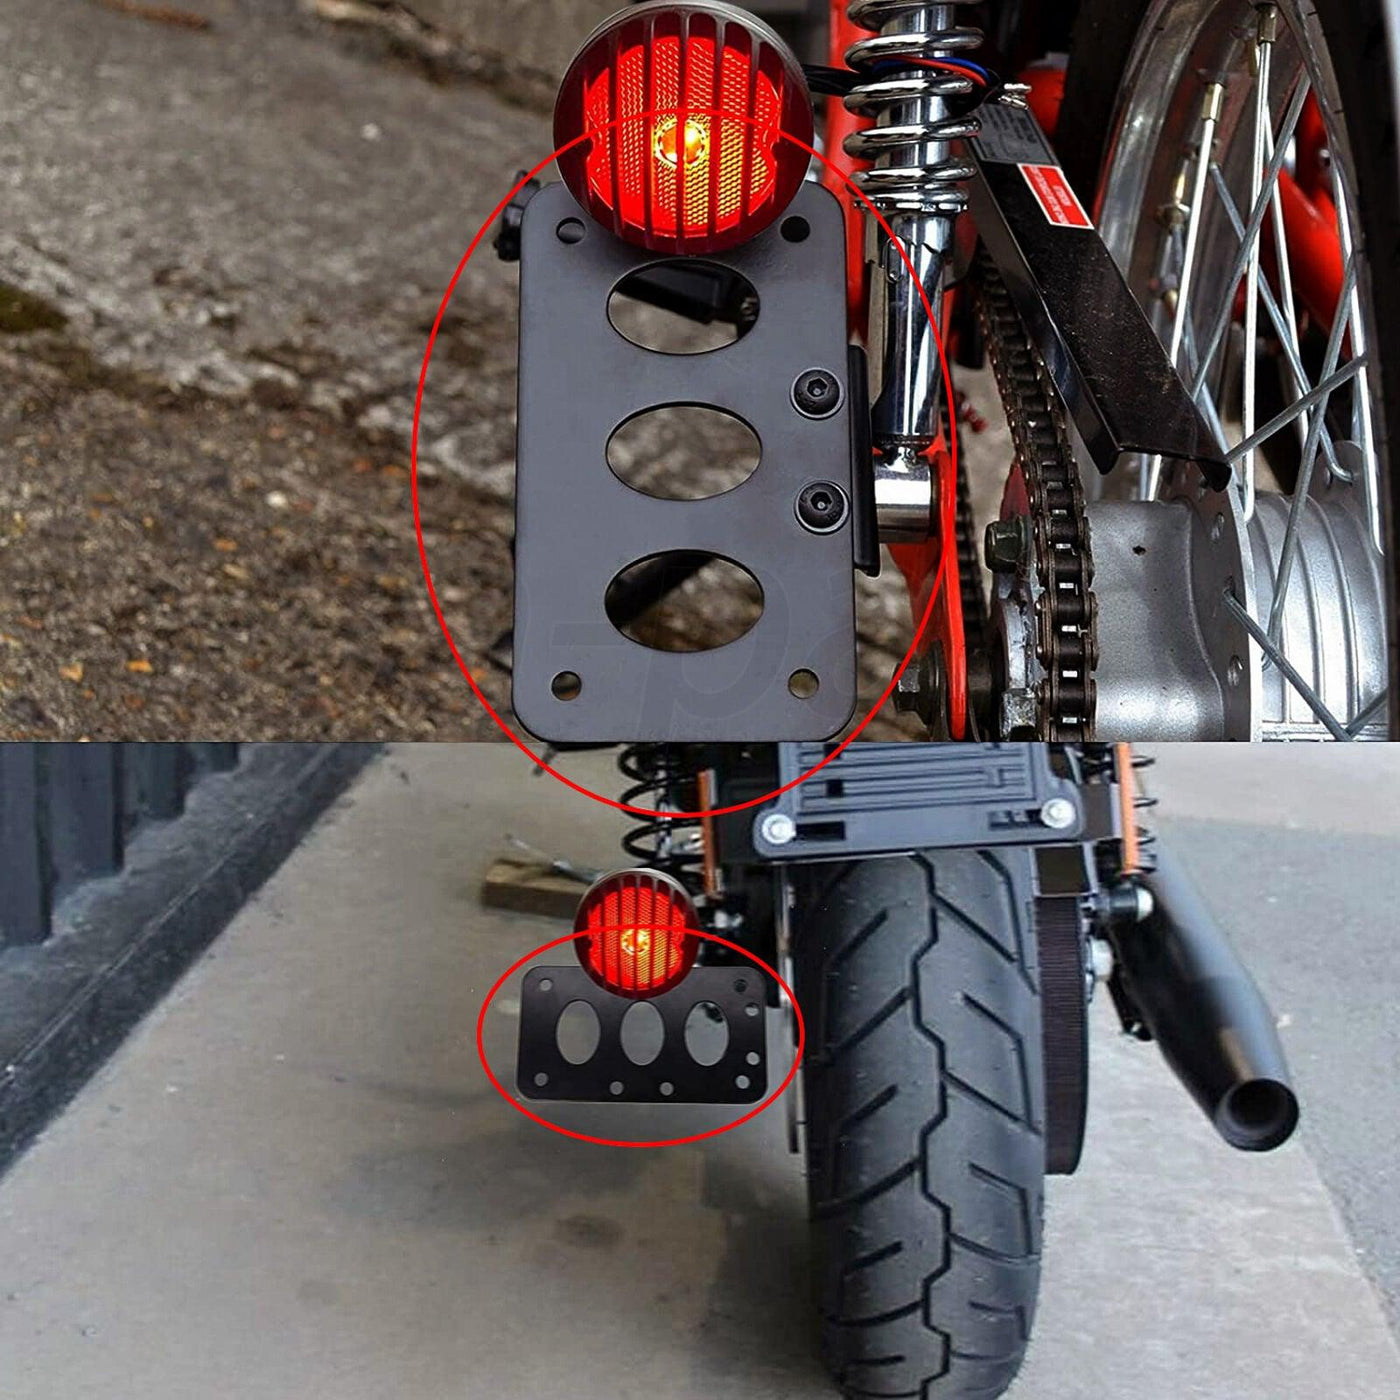 1" Black Mount License Plate Bracket Tail Light Holder Fit for Harley Dyna Honda - Moto Life Products